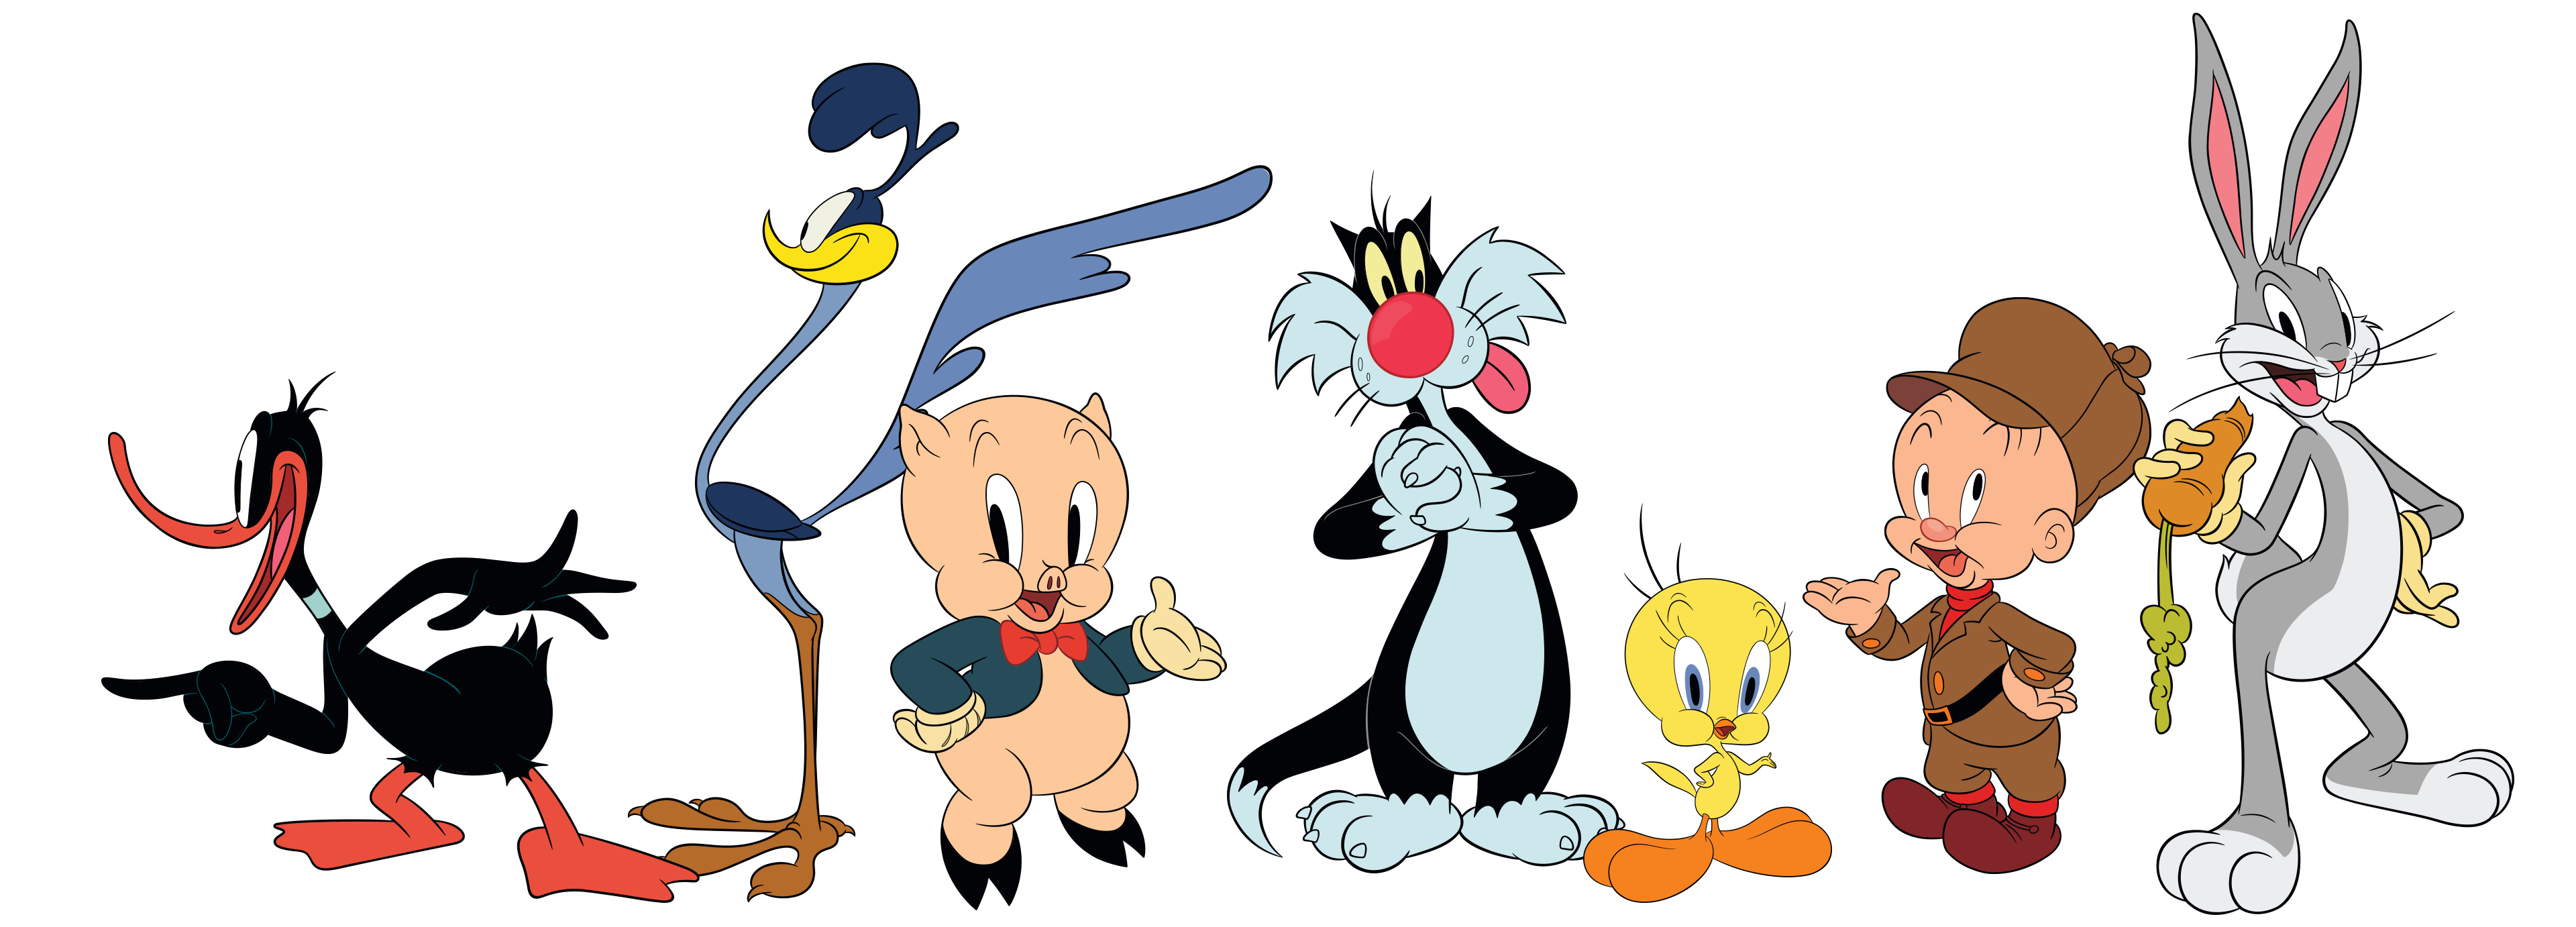 Looney Tunes cartoons, Games, Videos, Downloads, 3840x1390 Dual Screen Desktop